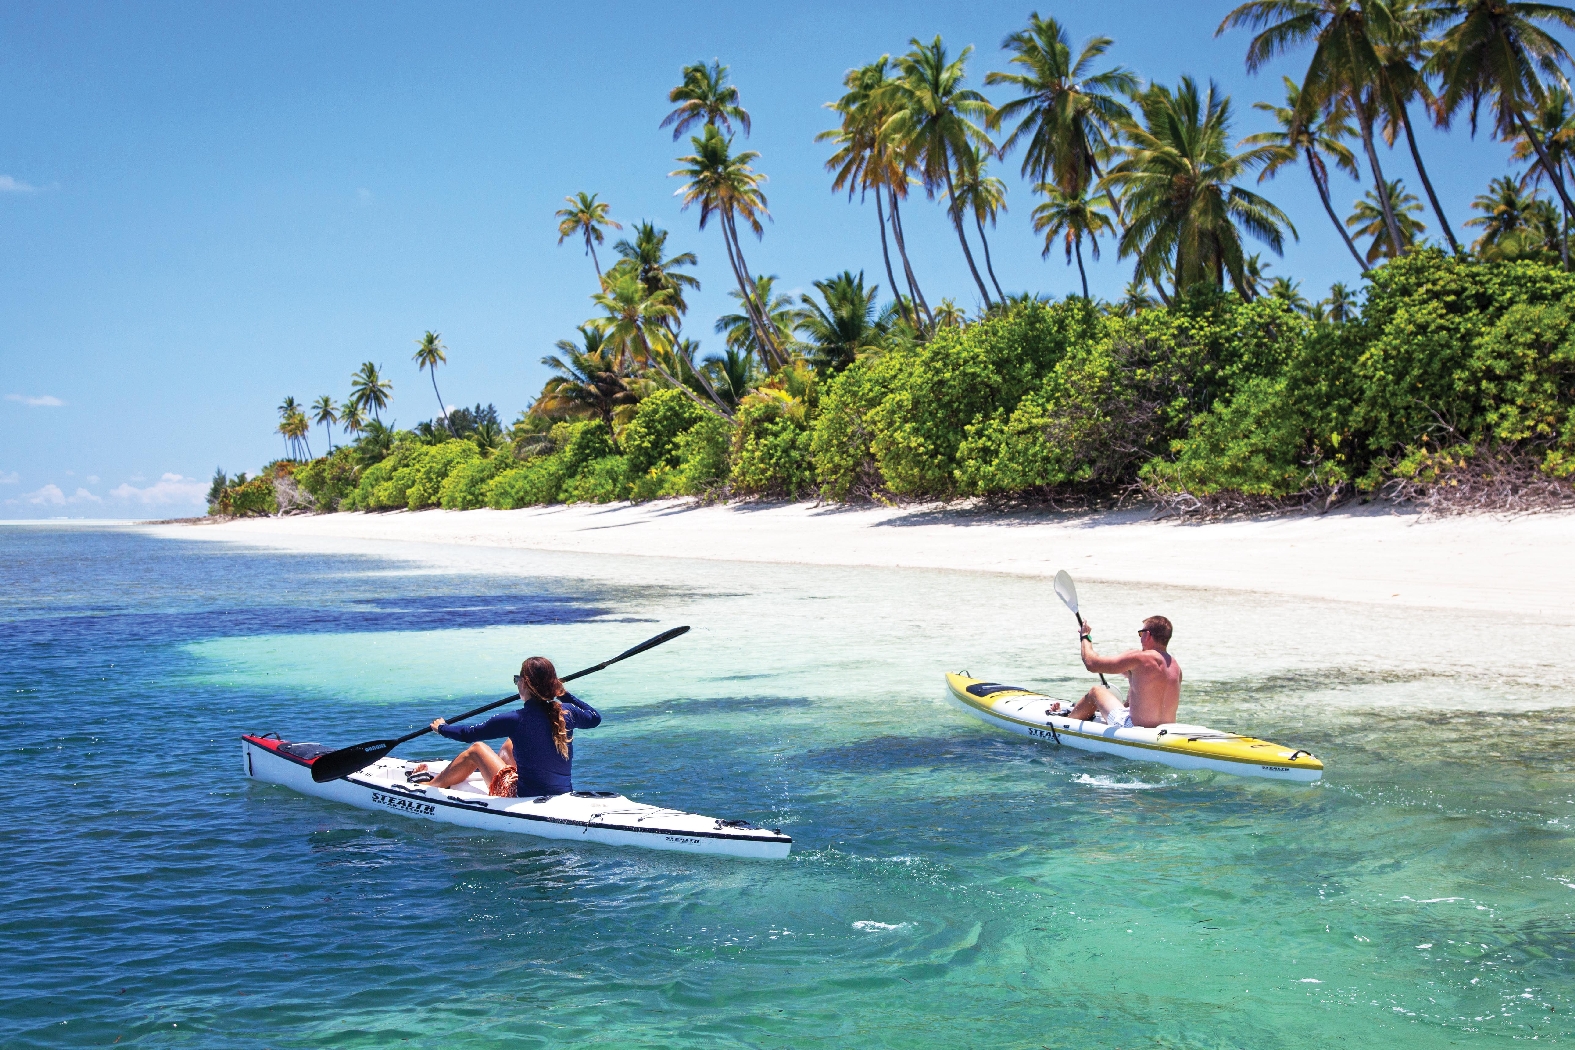 kayaking at alphone island, seychelles